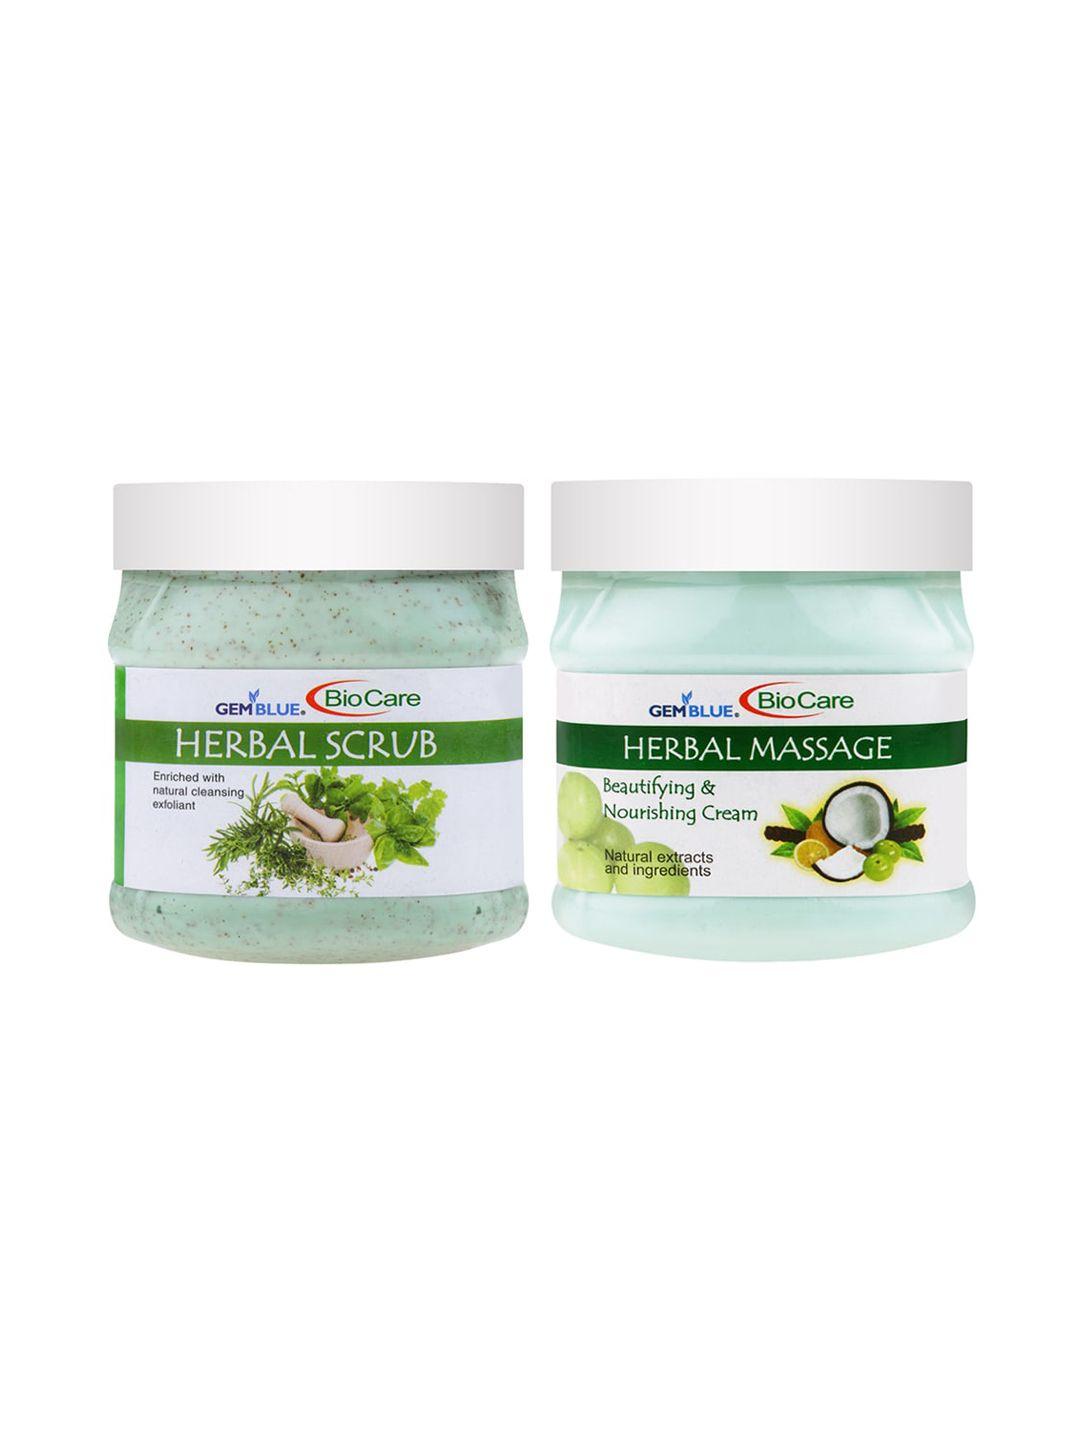 gemblue biocare set of herbal scrub & cream 500ml each